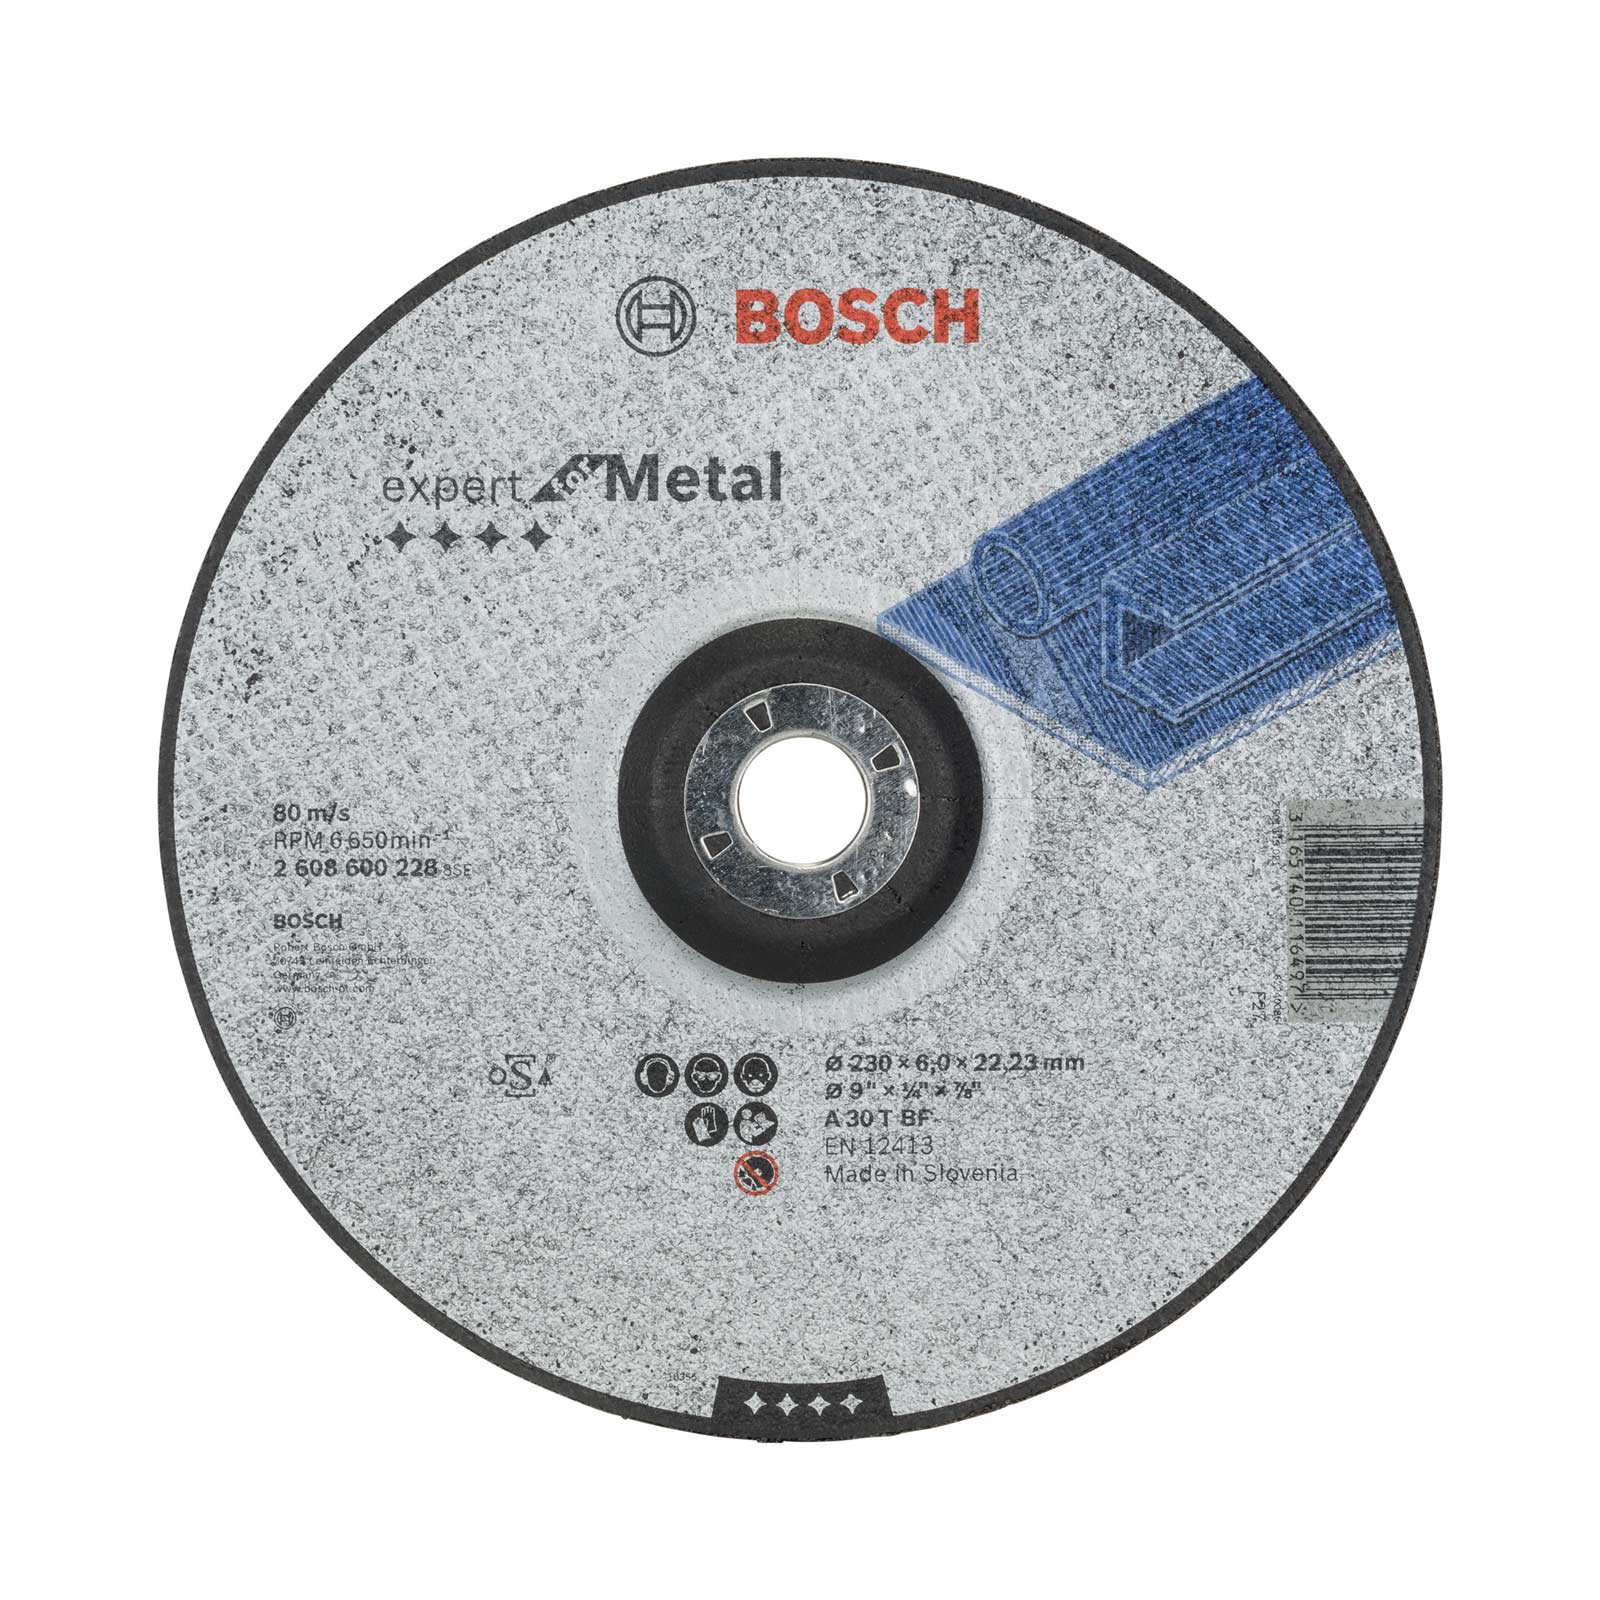 BOSCH brusný kotouč profilovaný Expert for Metal A 30 T BF, 230 mm, 6,0 mm 2608600228